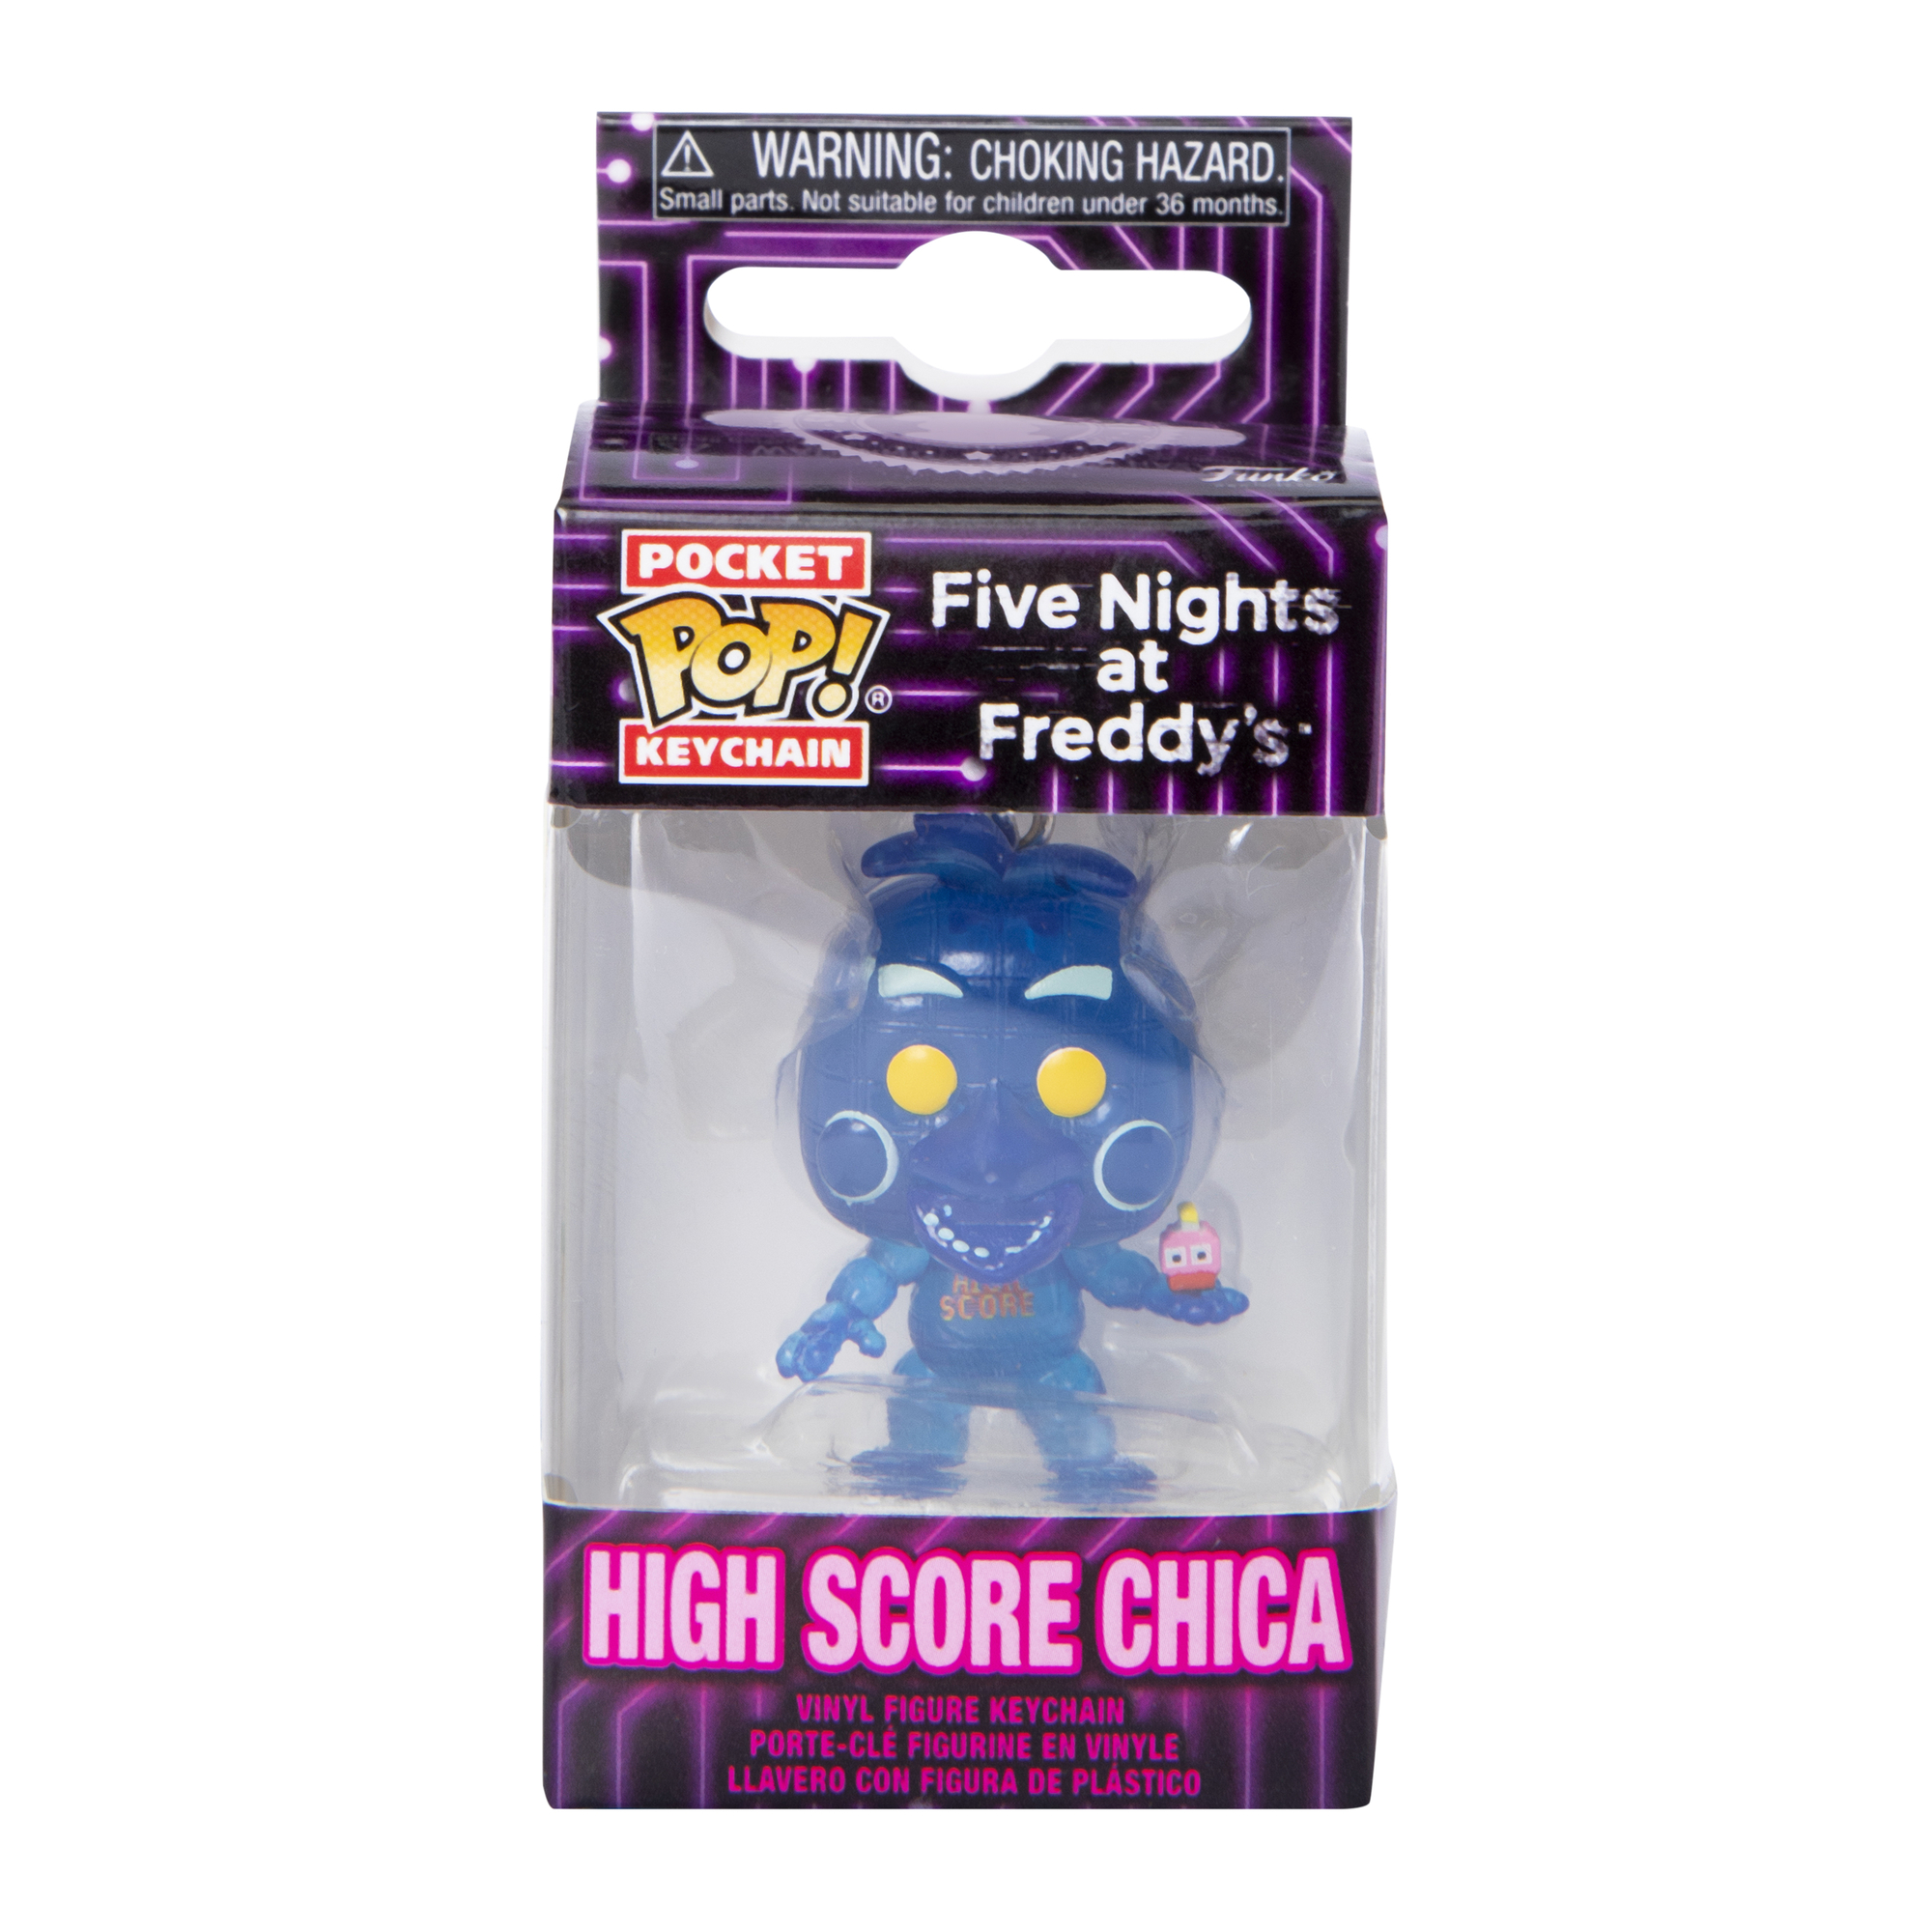 Funko Pocket Pop! Five Nights at Freddy's™ vinyl figure keychain